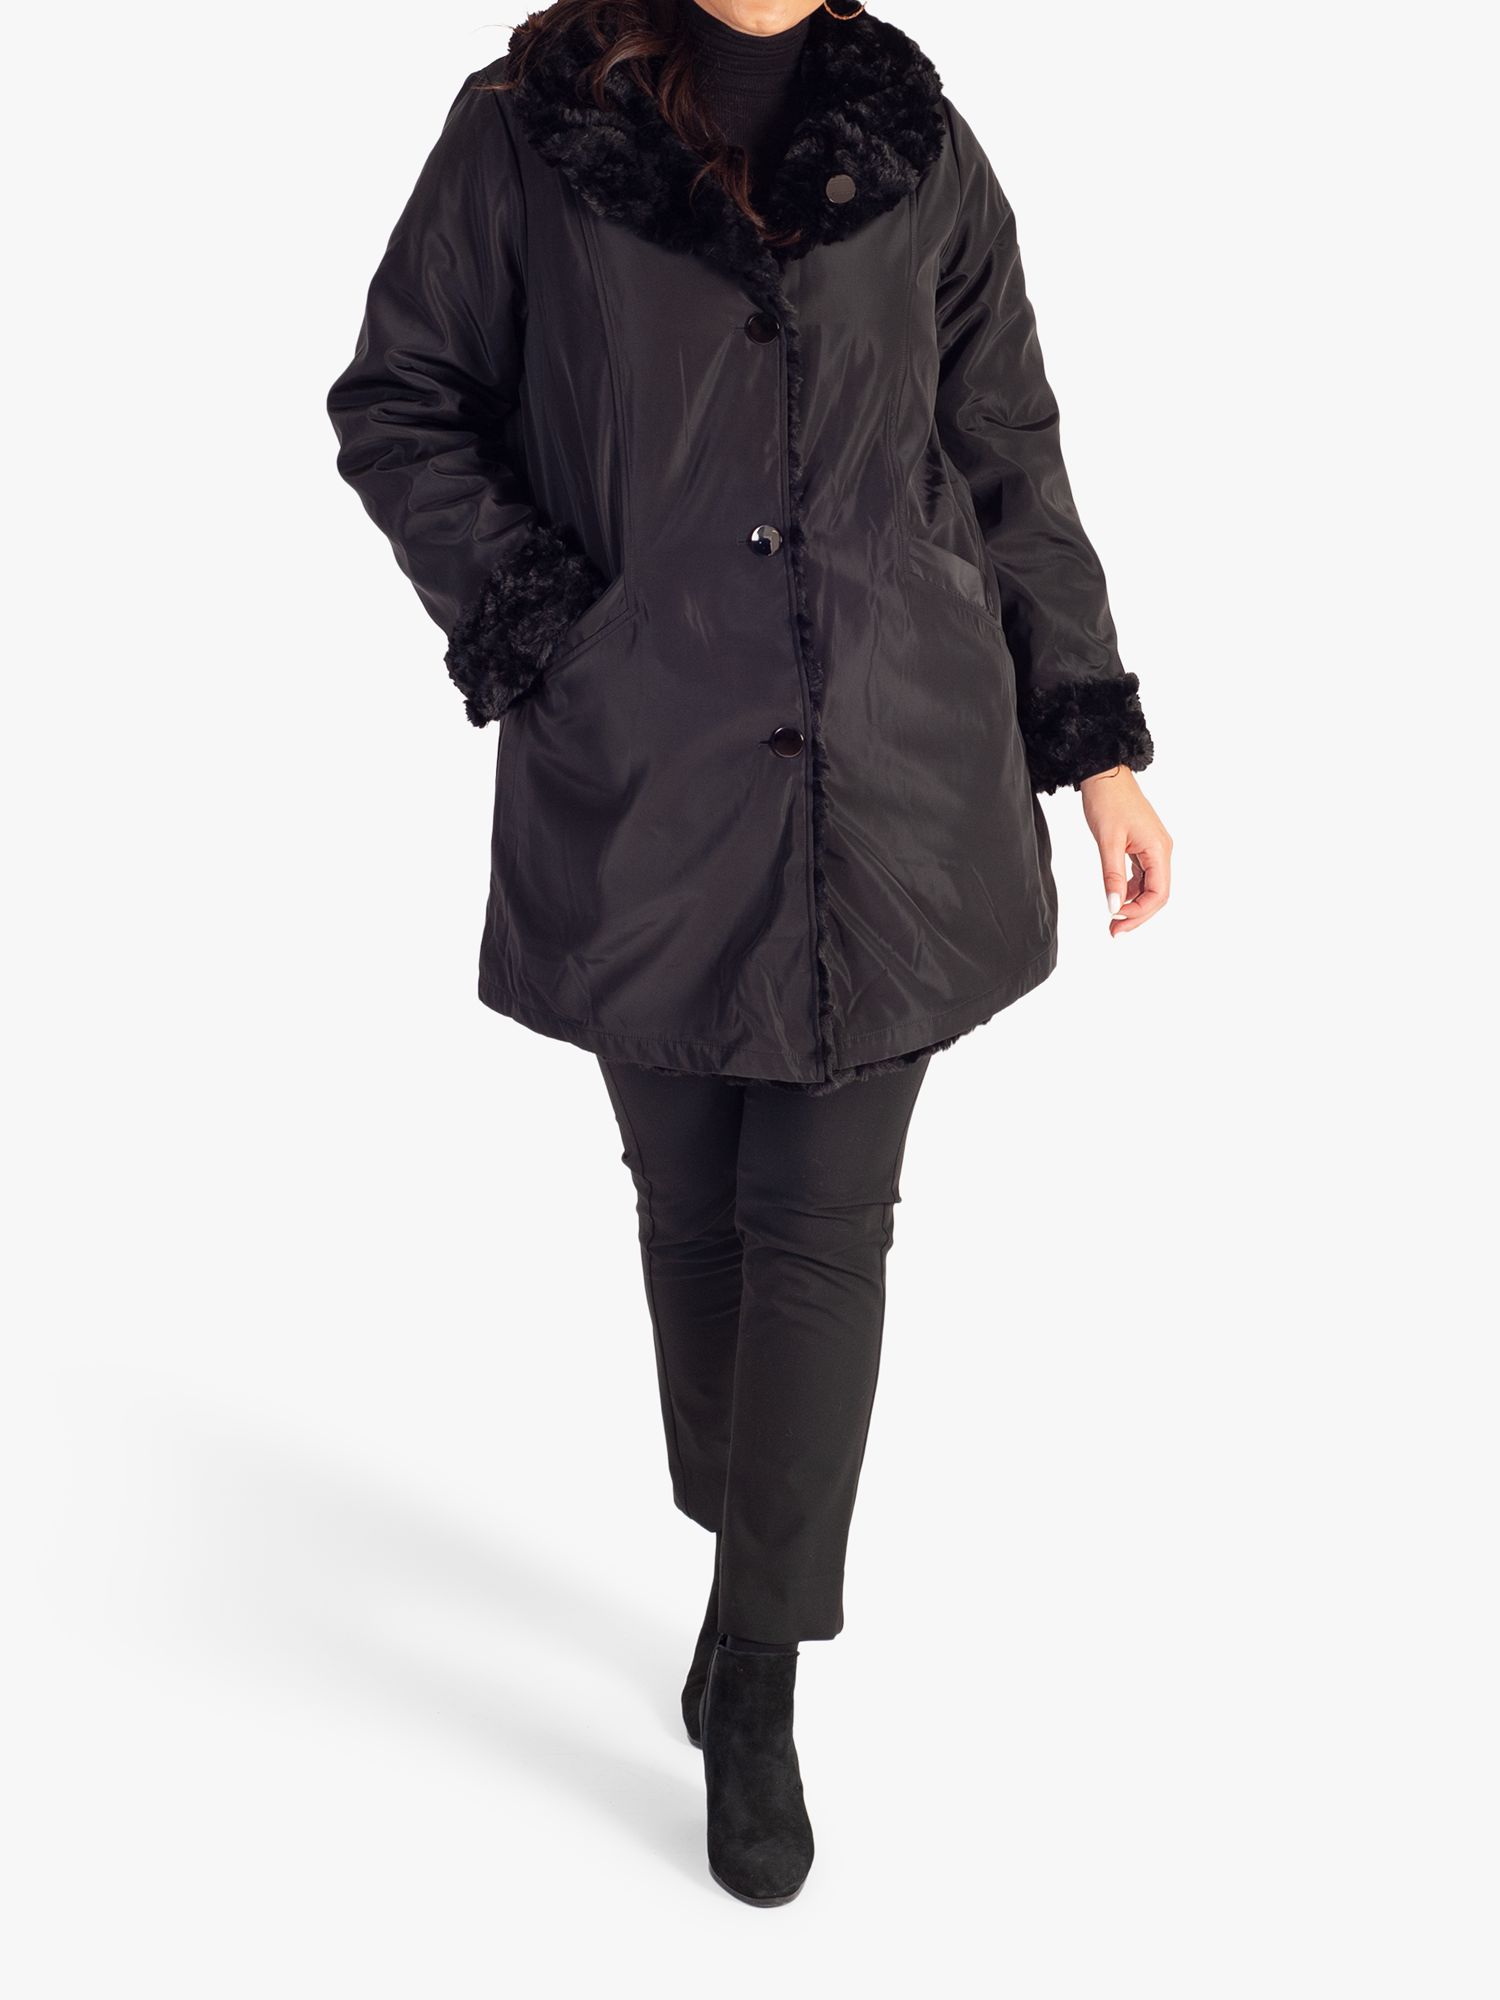 chesca Faux Fur Reversible Coat, Black at John Lewis & Partners